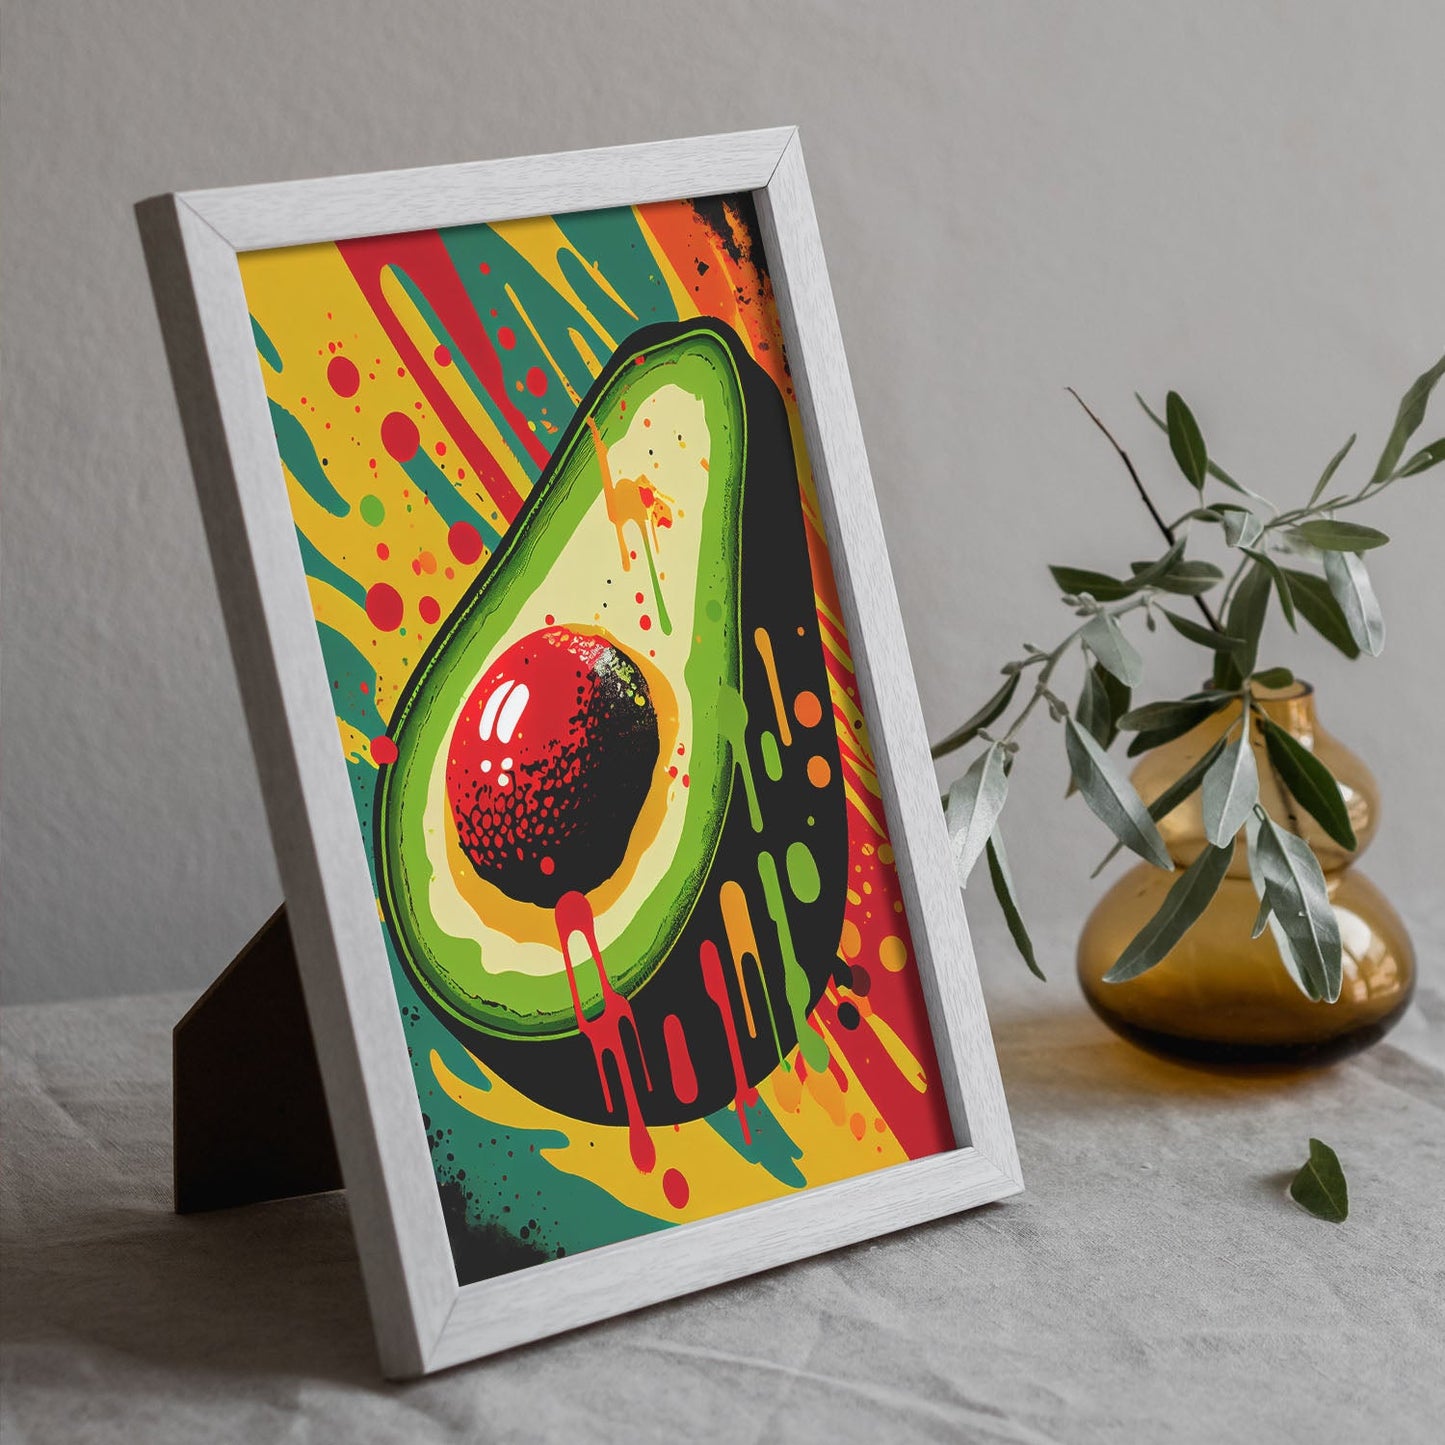 Nacnic Avocado Pop Art_3. Aesthetic Wall Art Prints for Bedroom or Living Room Design.